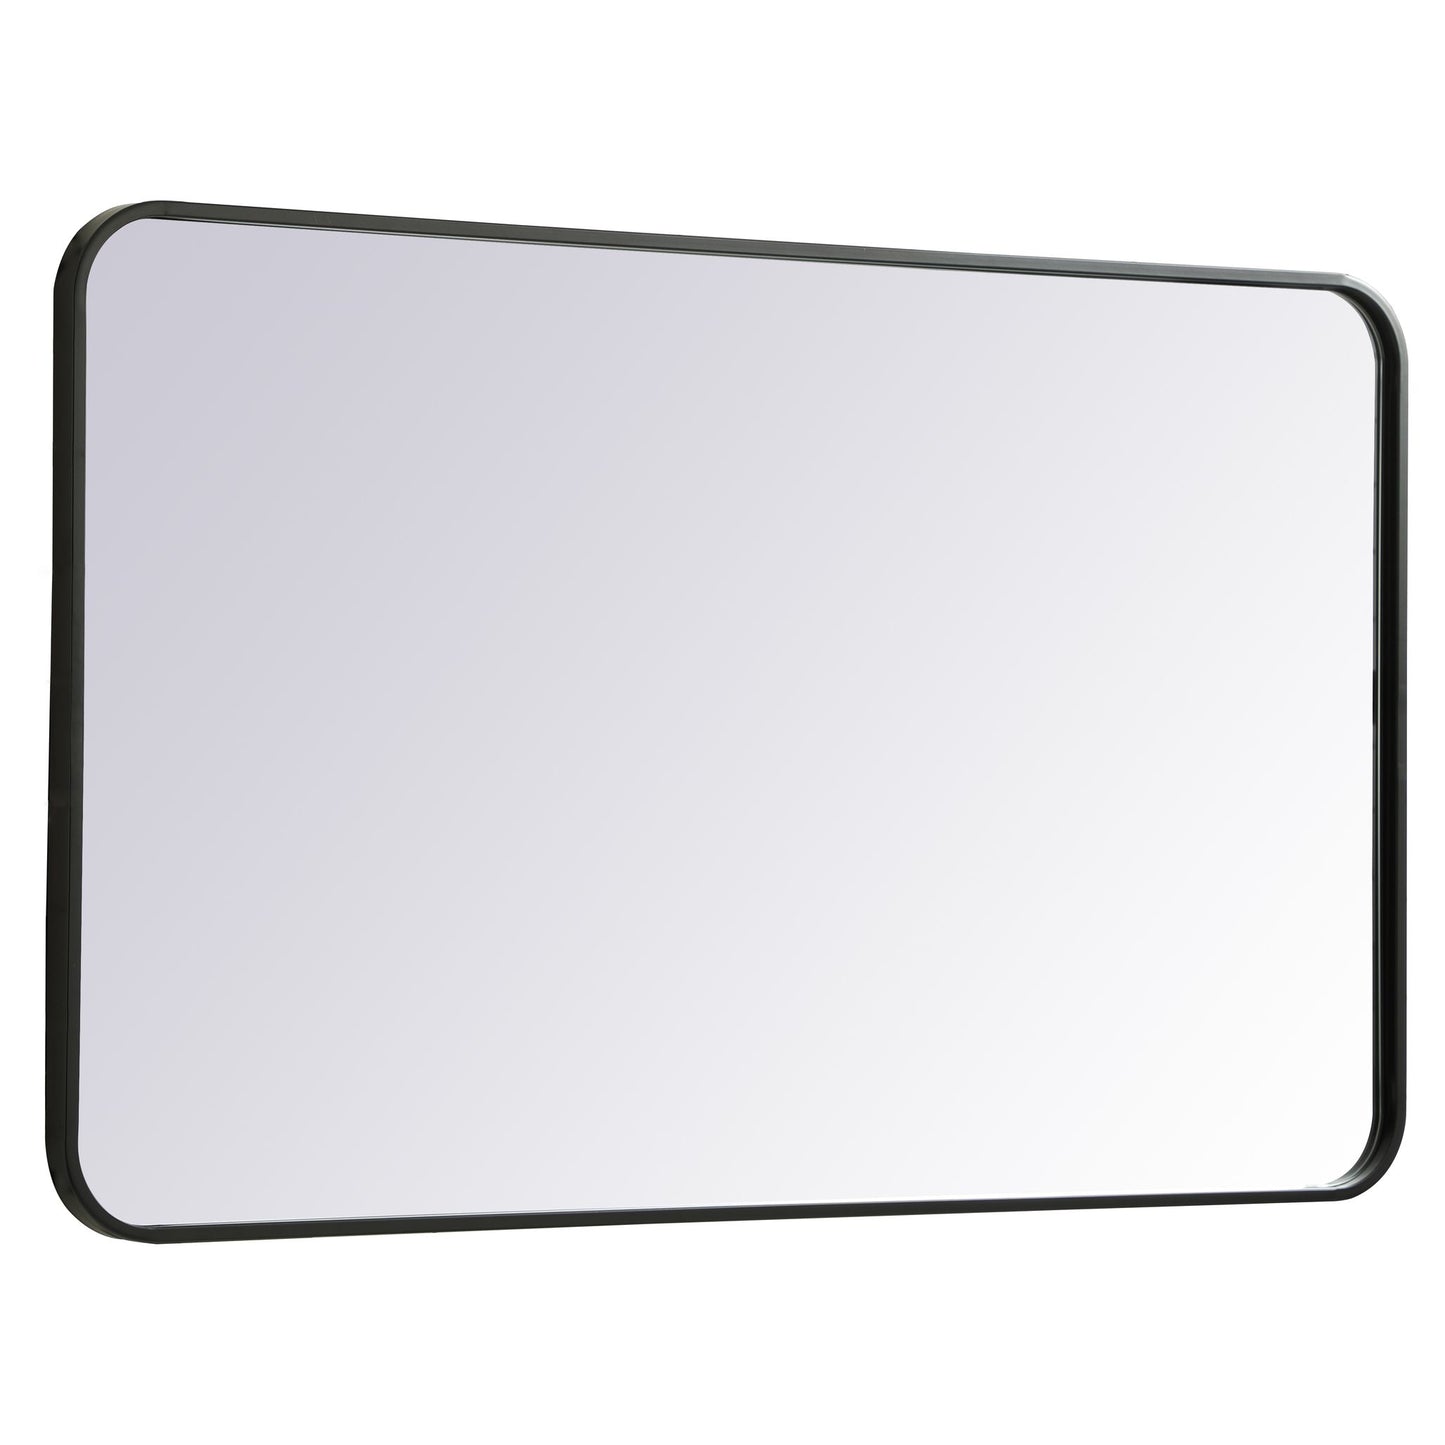 MR802440BK Evermore 24" x 40" Metal Framed Rectangular Mirror in Black